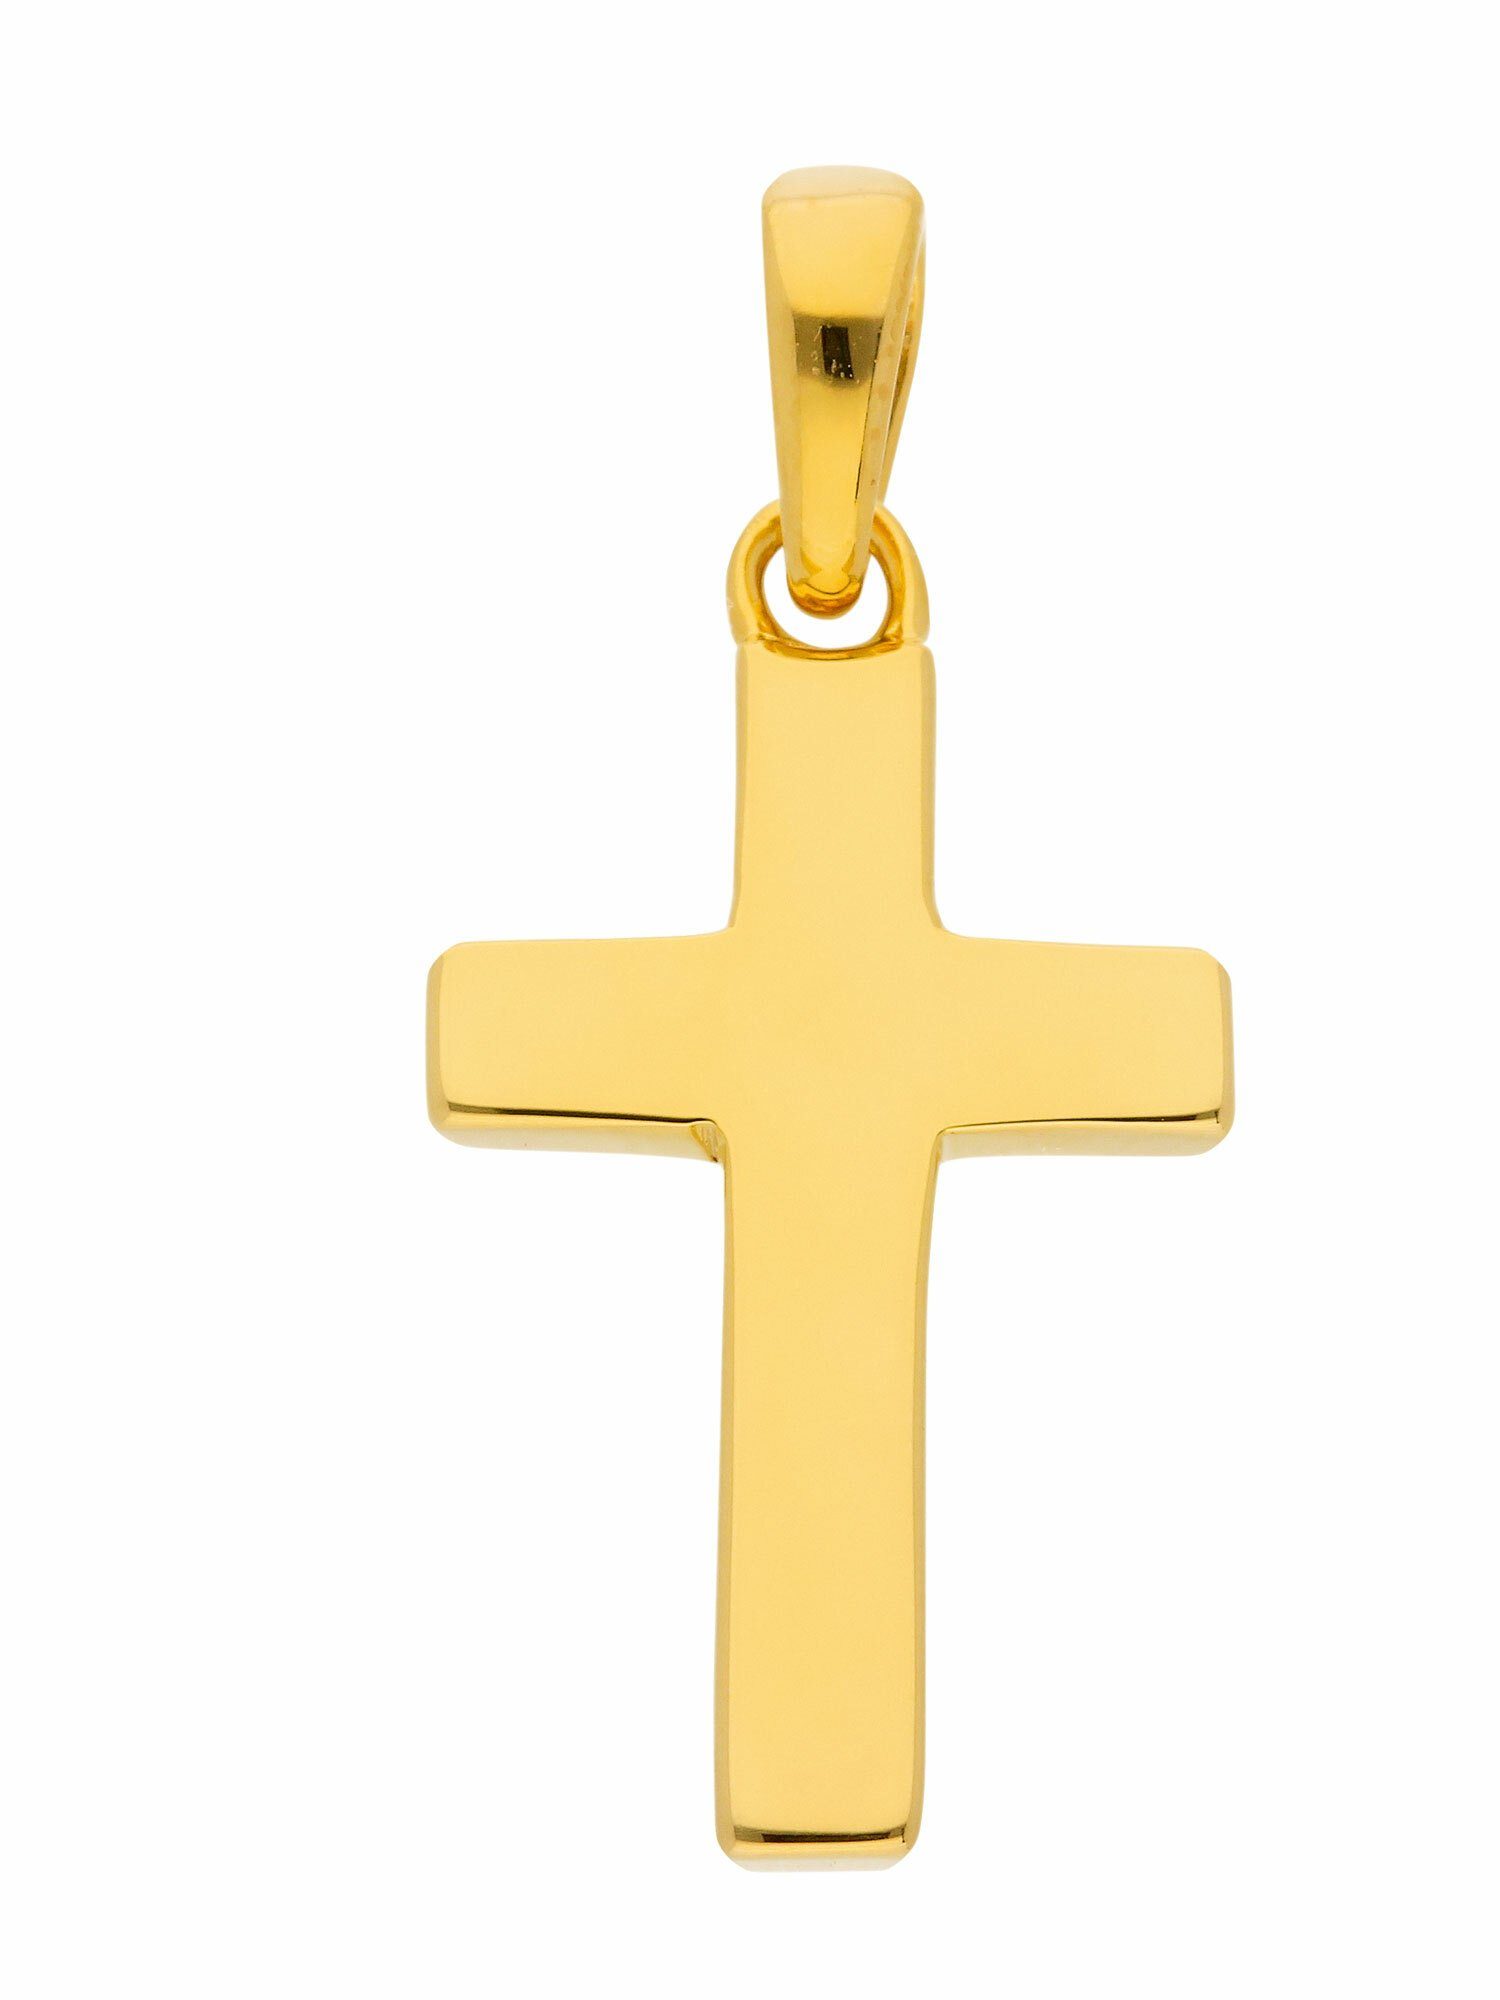 Adelia´s Kettenanhänger 925 Silber Kreuz Anhänger, Silberschmuck für Damen & Herren